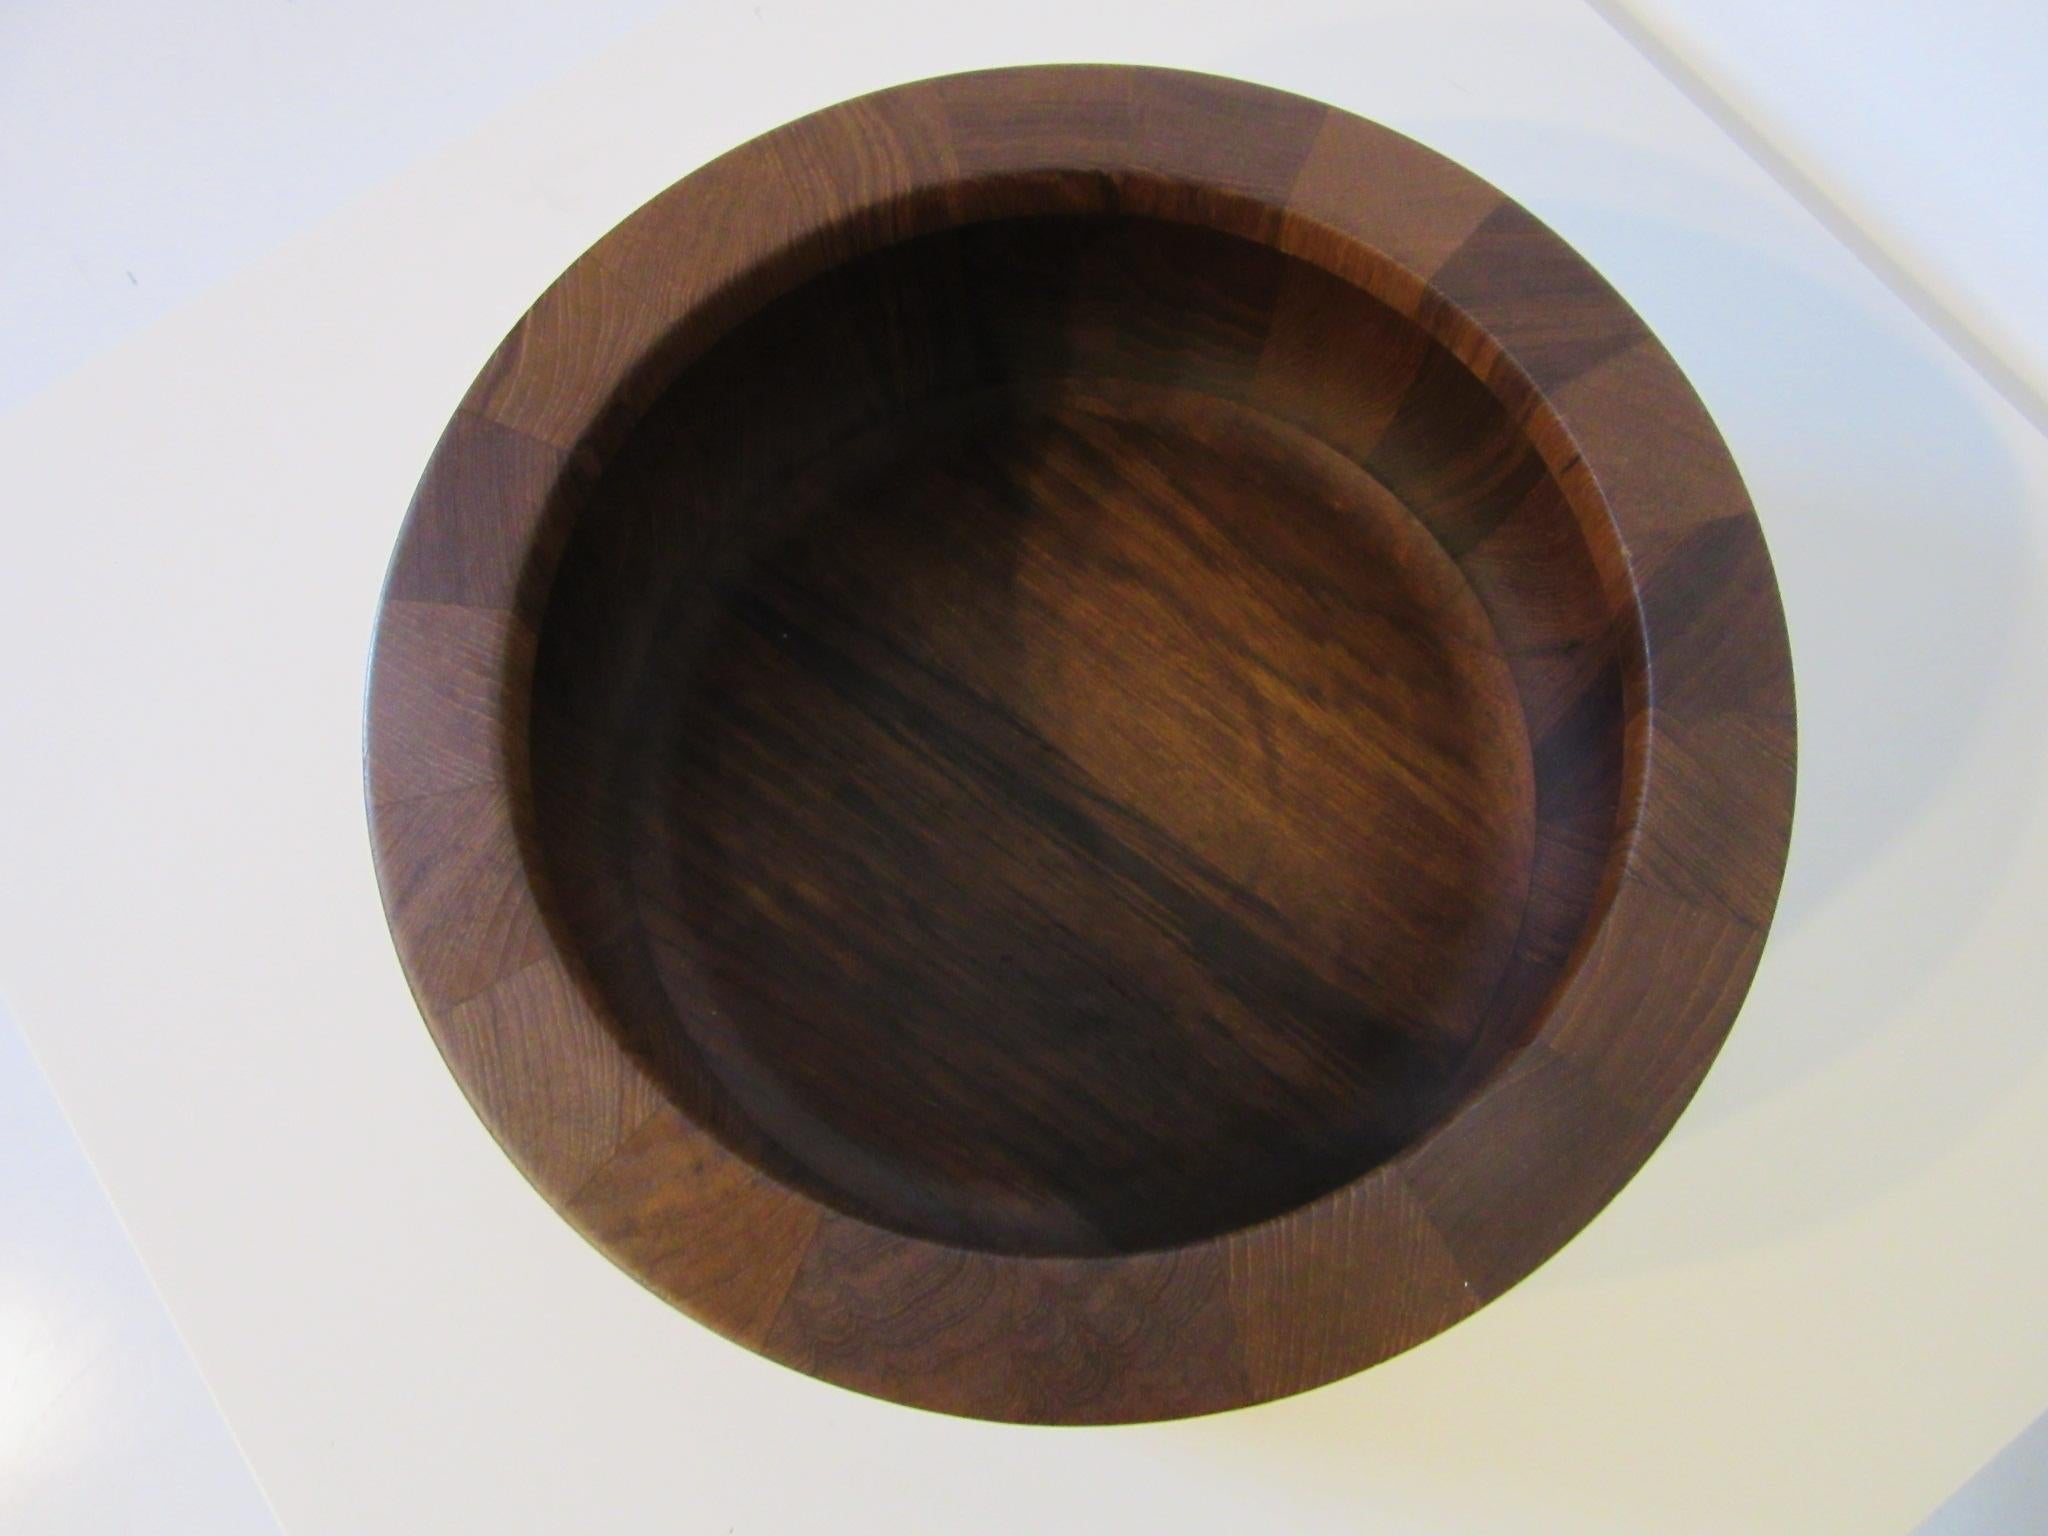 dansk wood bowl